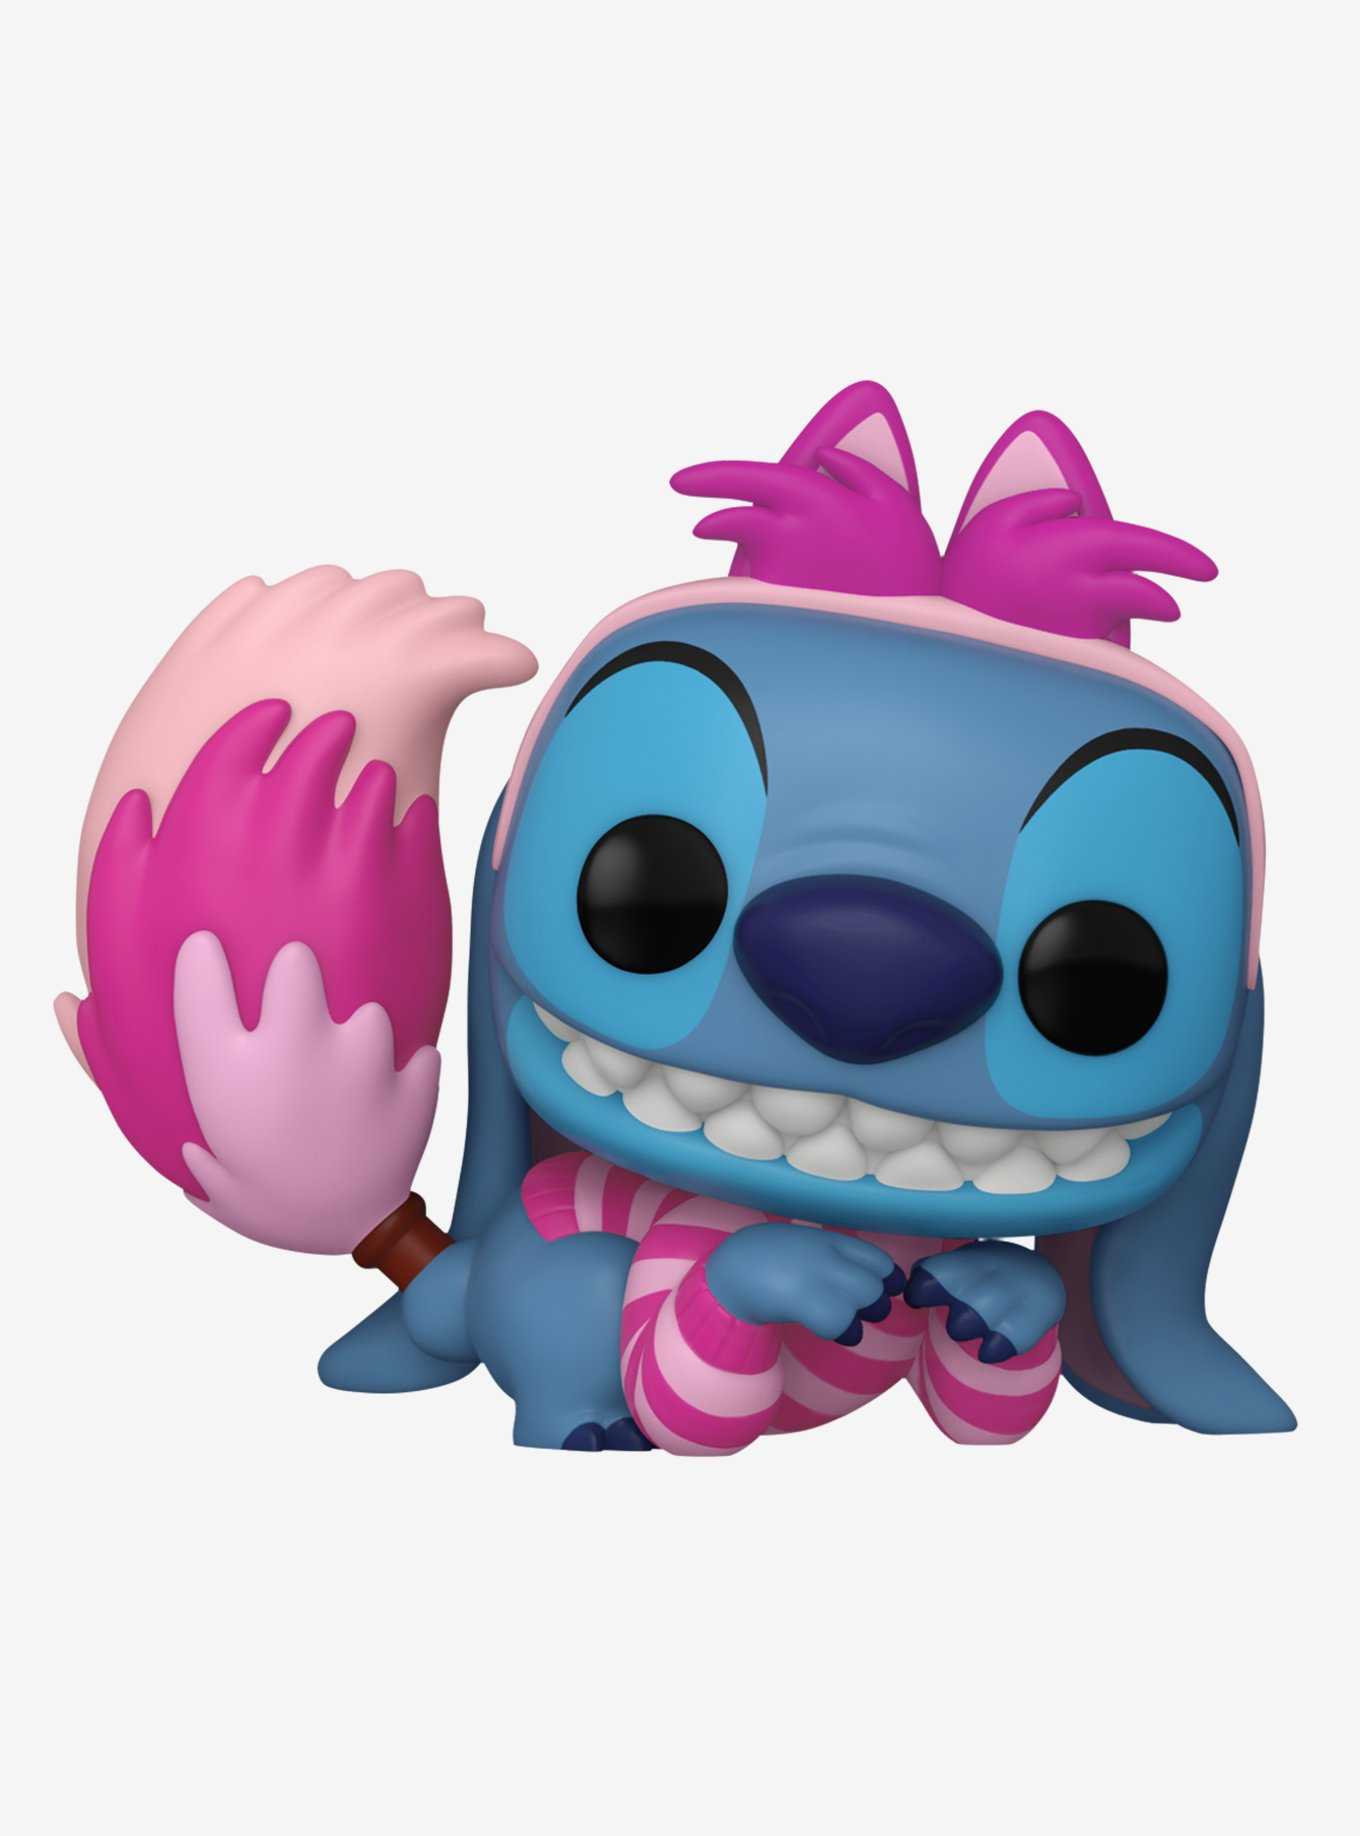 Funko Pop! Disney Stitch in Costume Stitch as Cheshire Cat Vinyl Figure, , hi-res